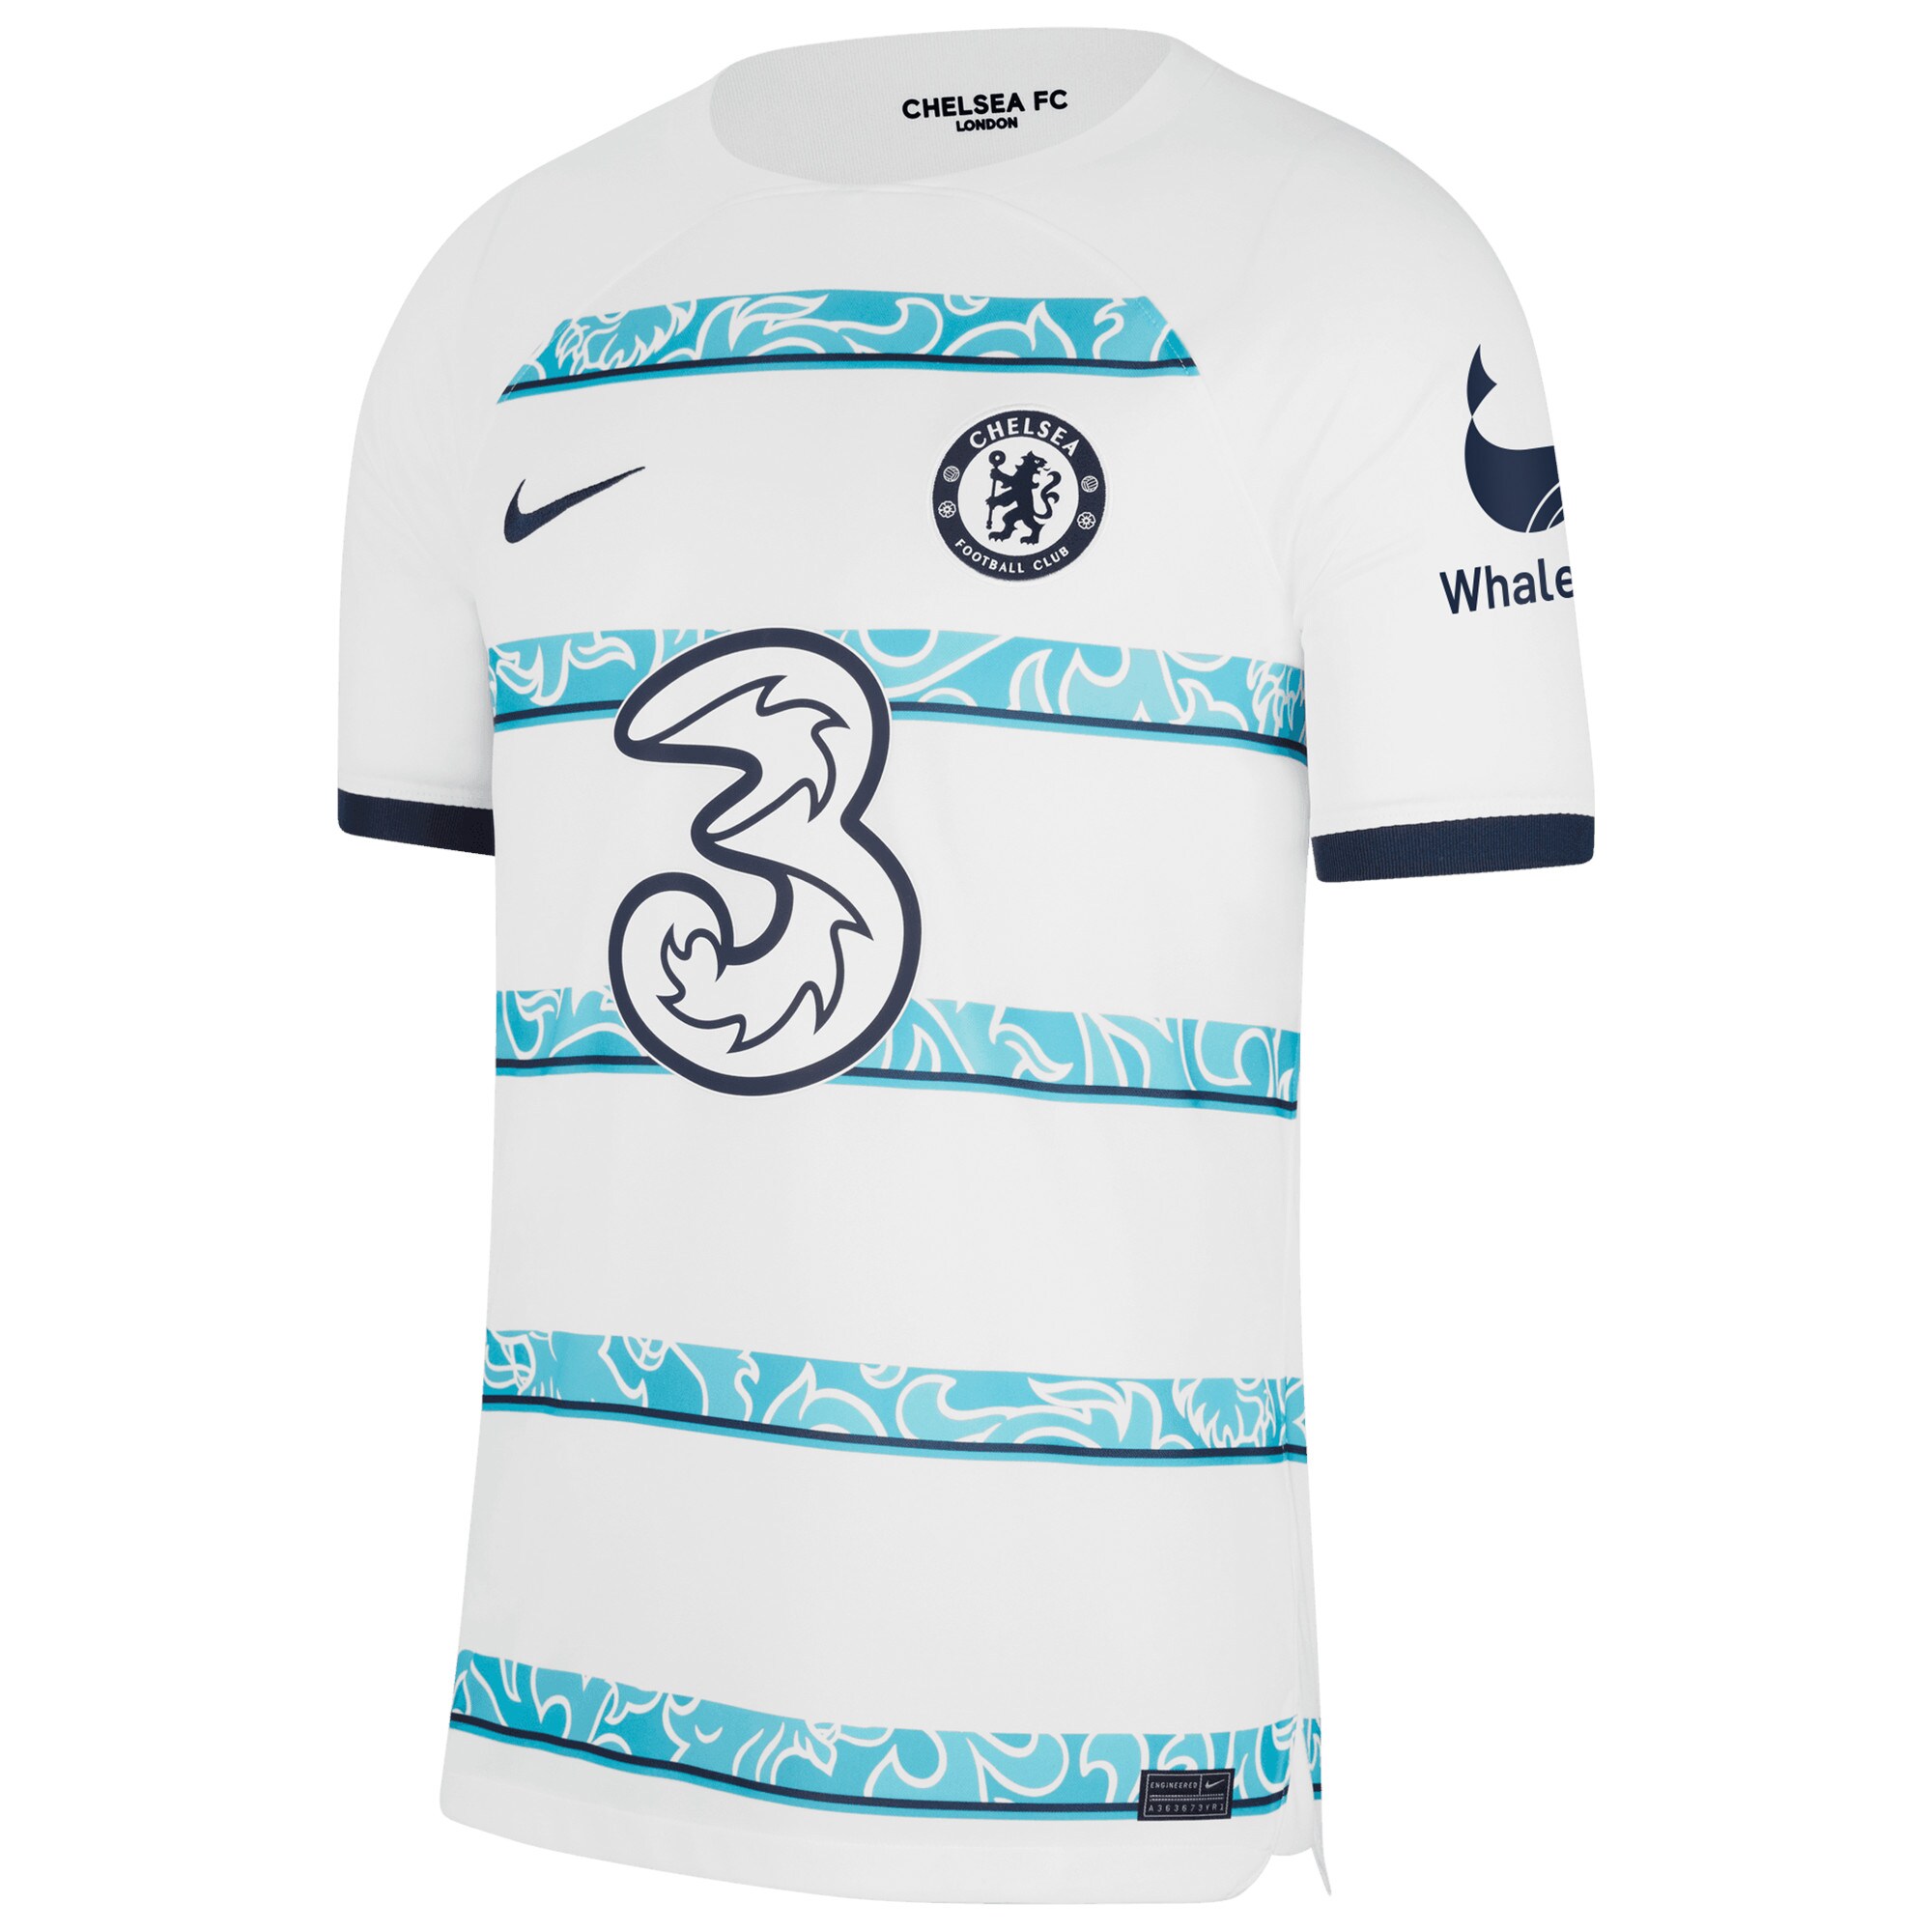 Chelsea WSL Away Stadium Shirt 2022-23 with Kerr 20 printing